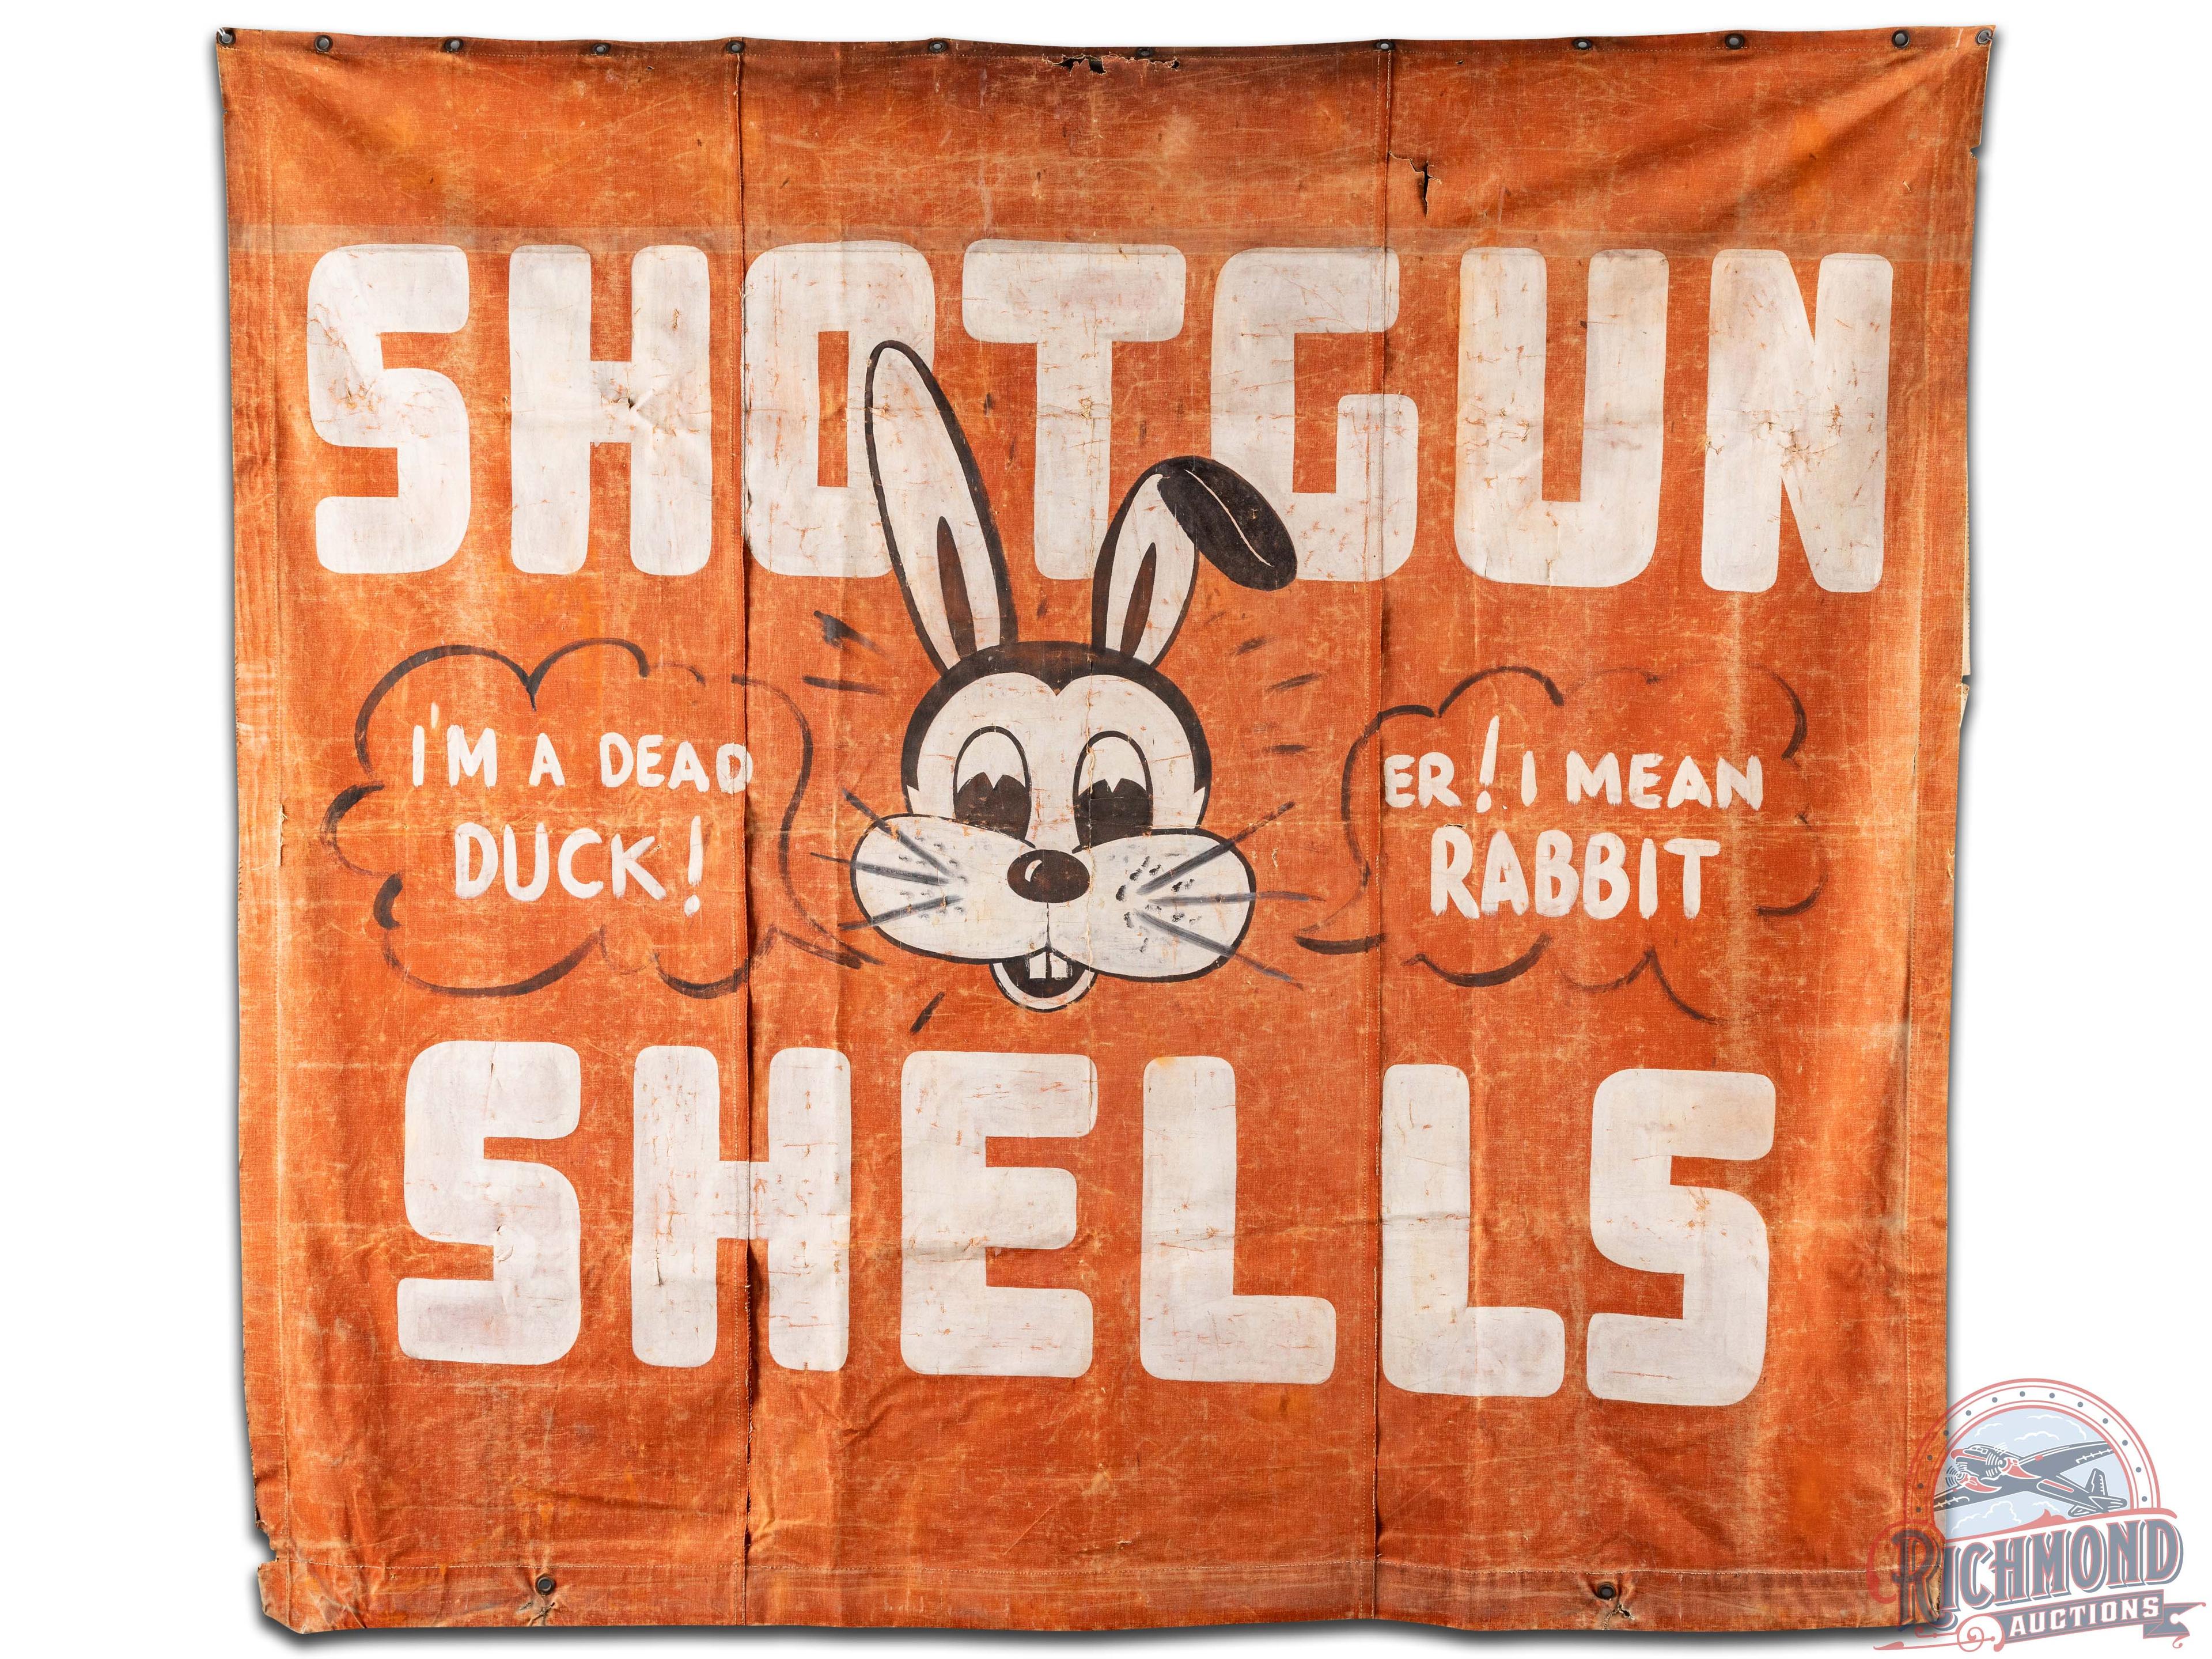 7' Hand Painted Shotgun Shells Canvas Banner With Rabbit